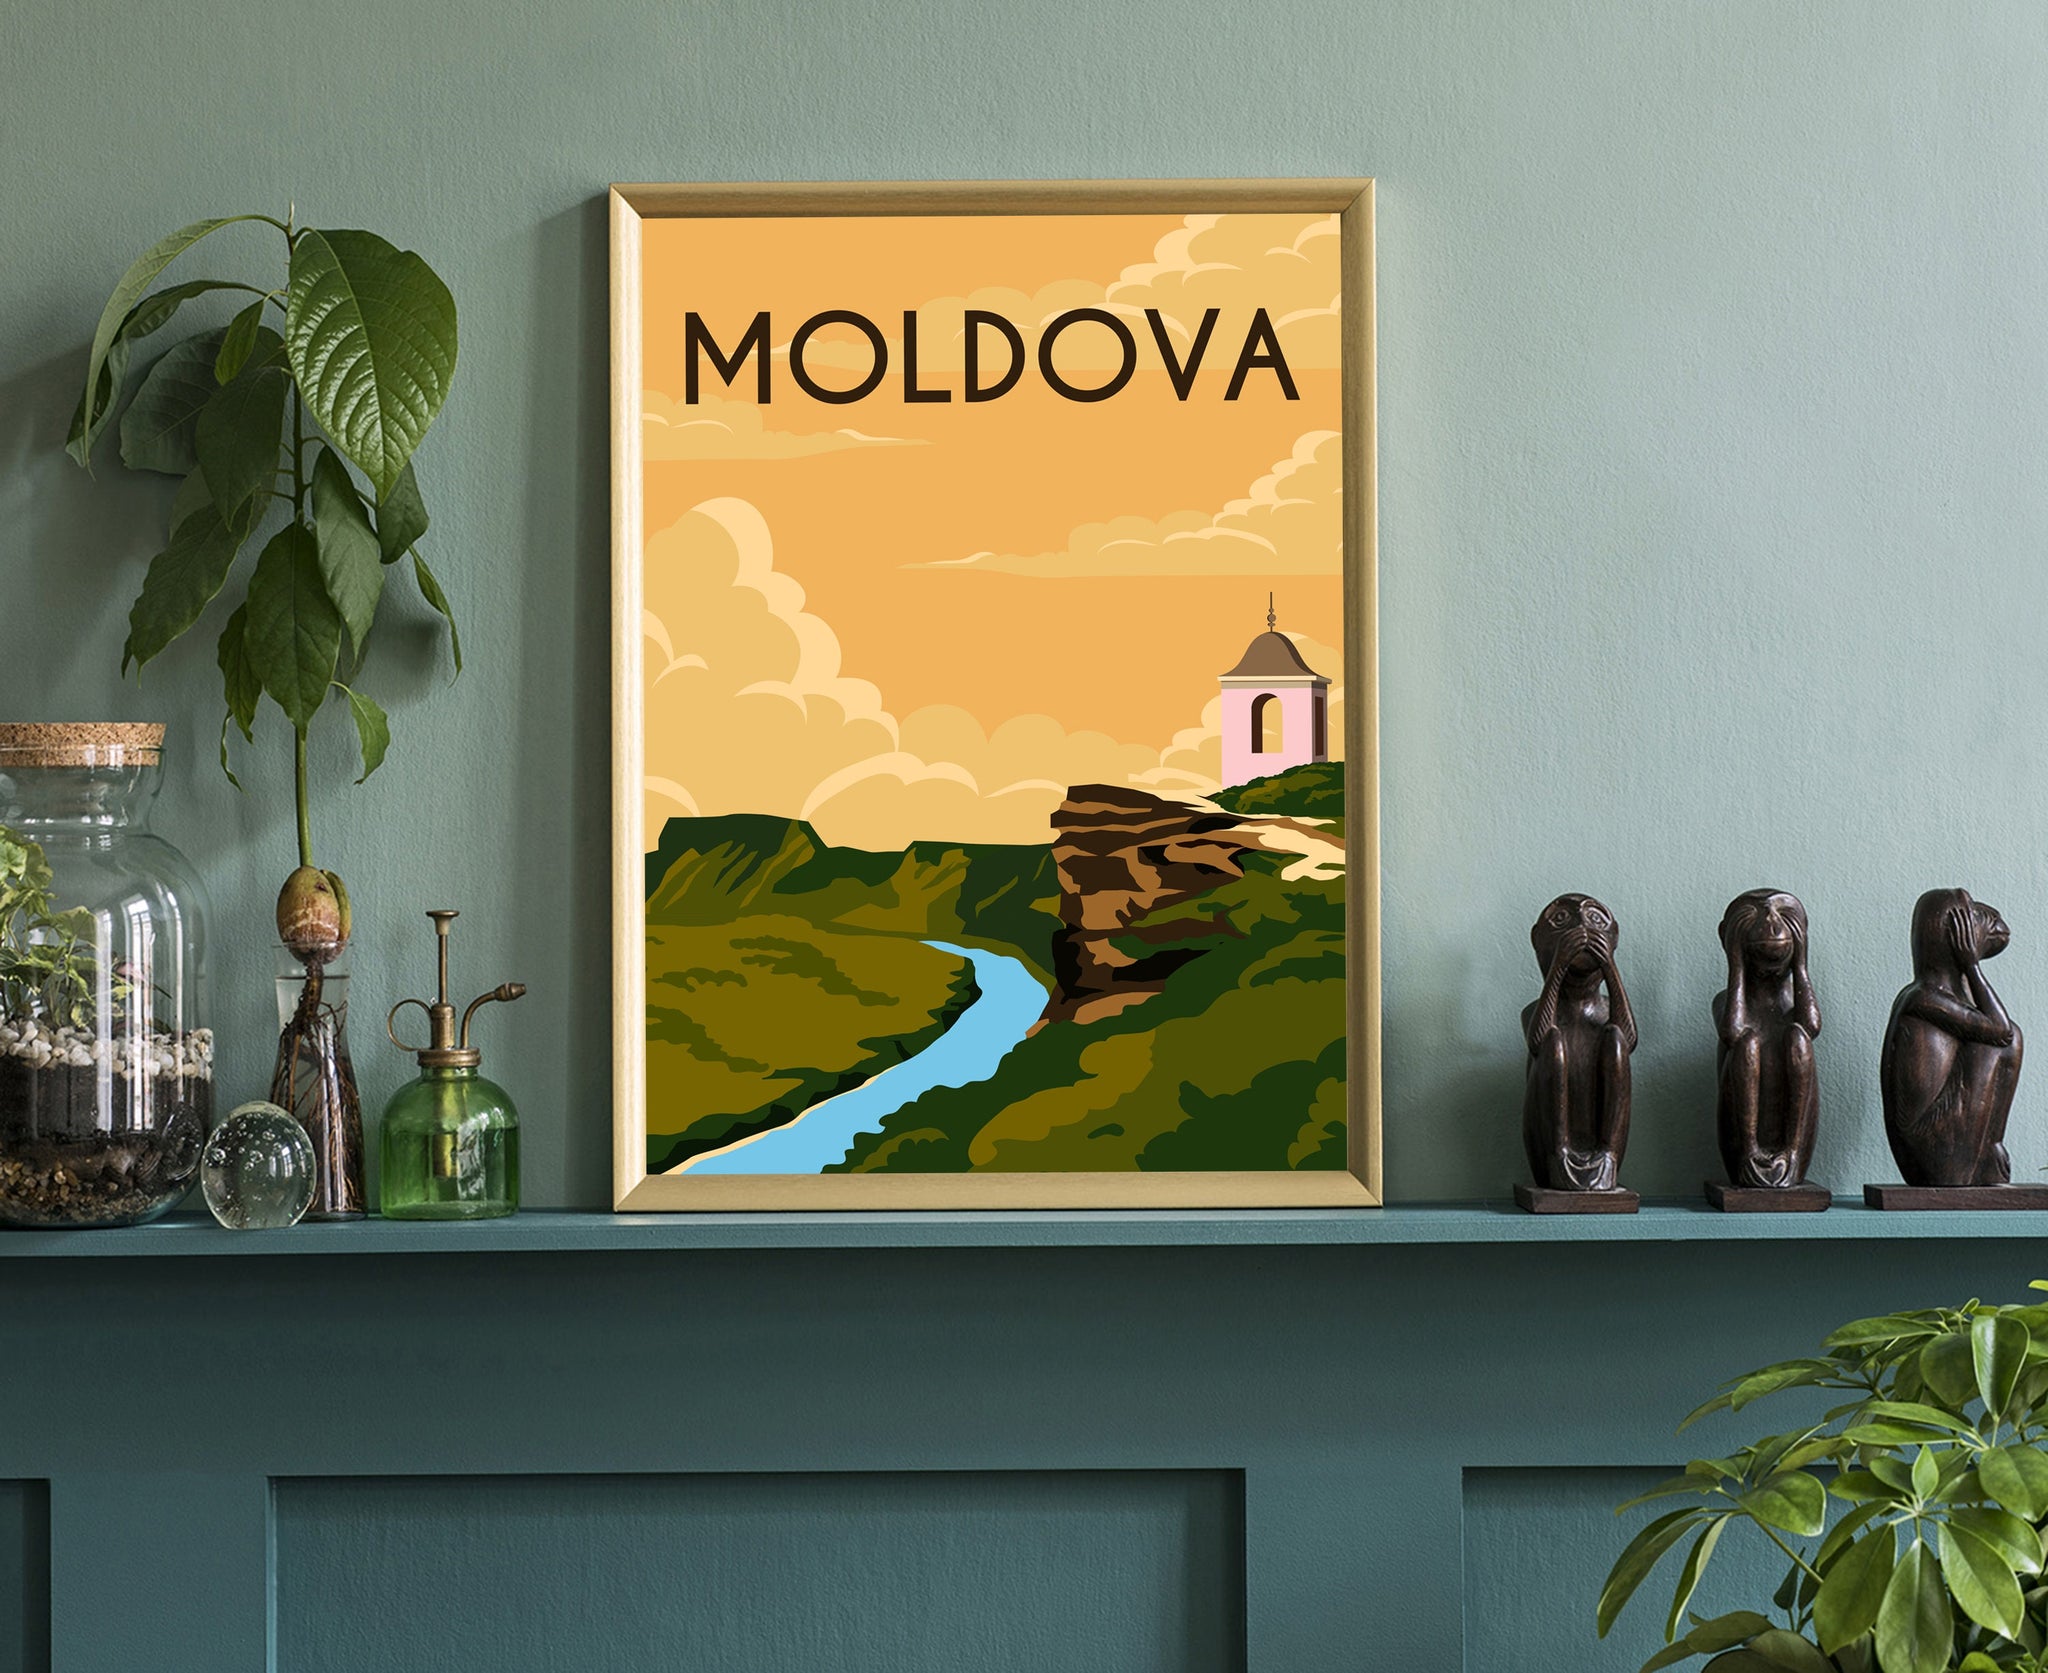 MOLDOVA travel poster, Moldova cityscape and landmark poster wall art, Housewarming gift, Office wall decoration, Moldova retro poster print